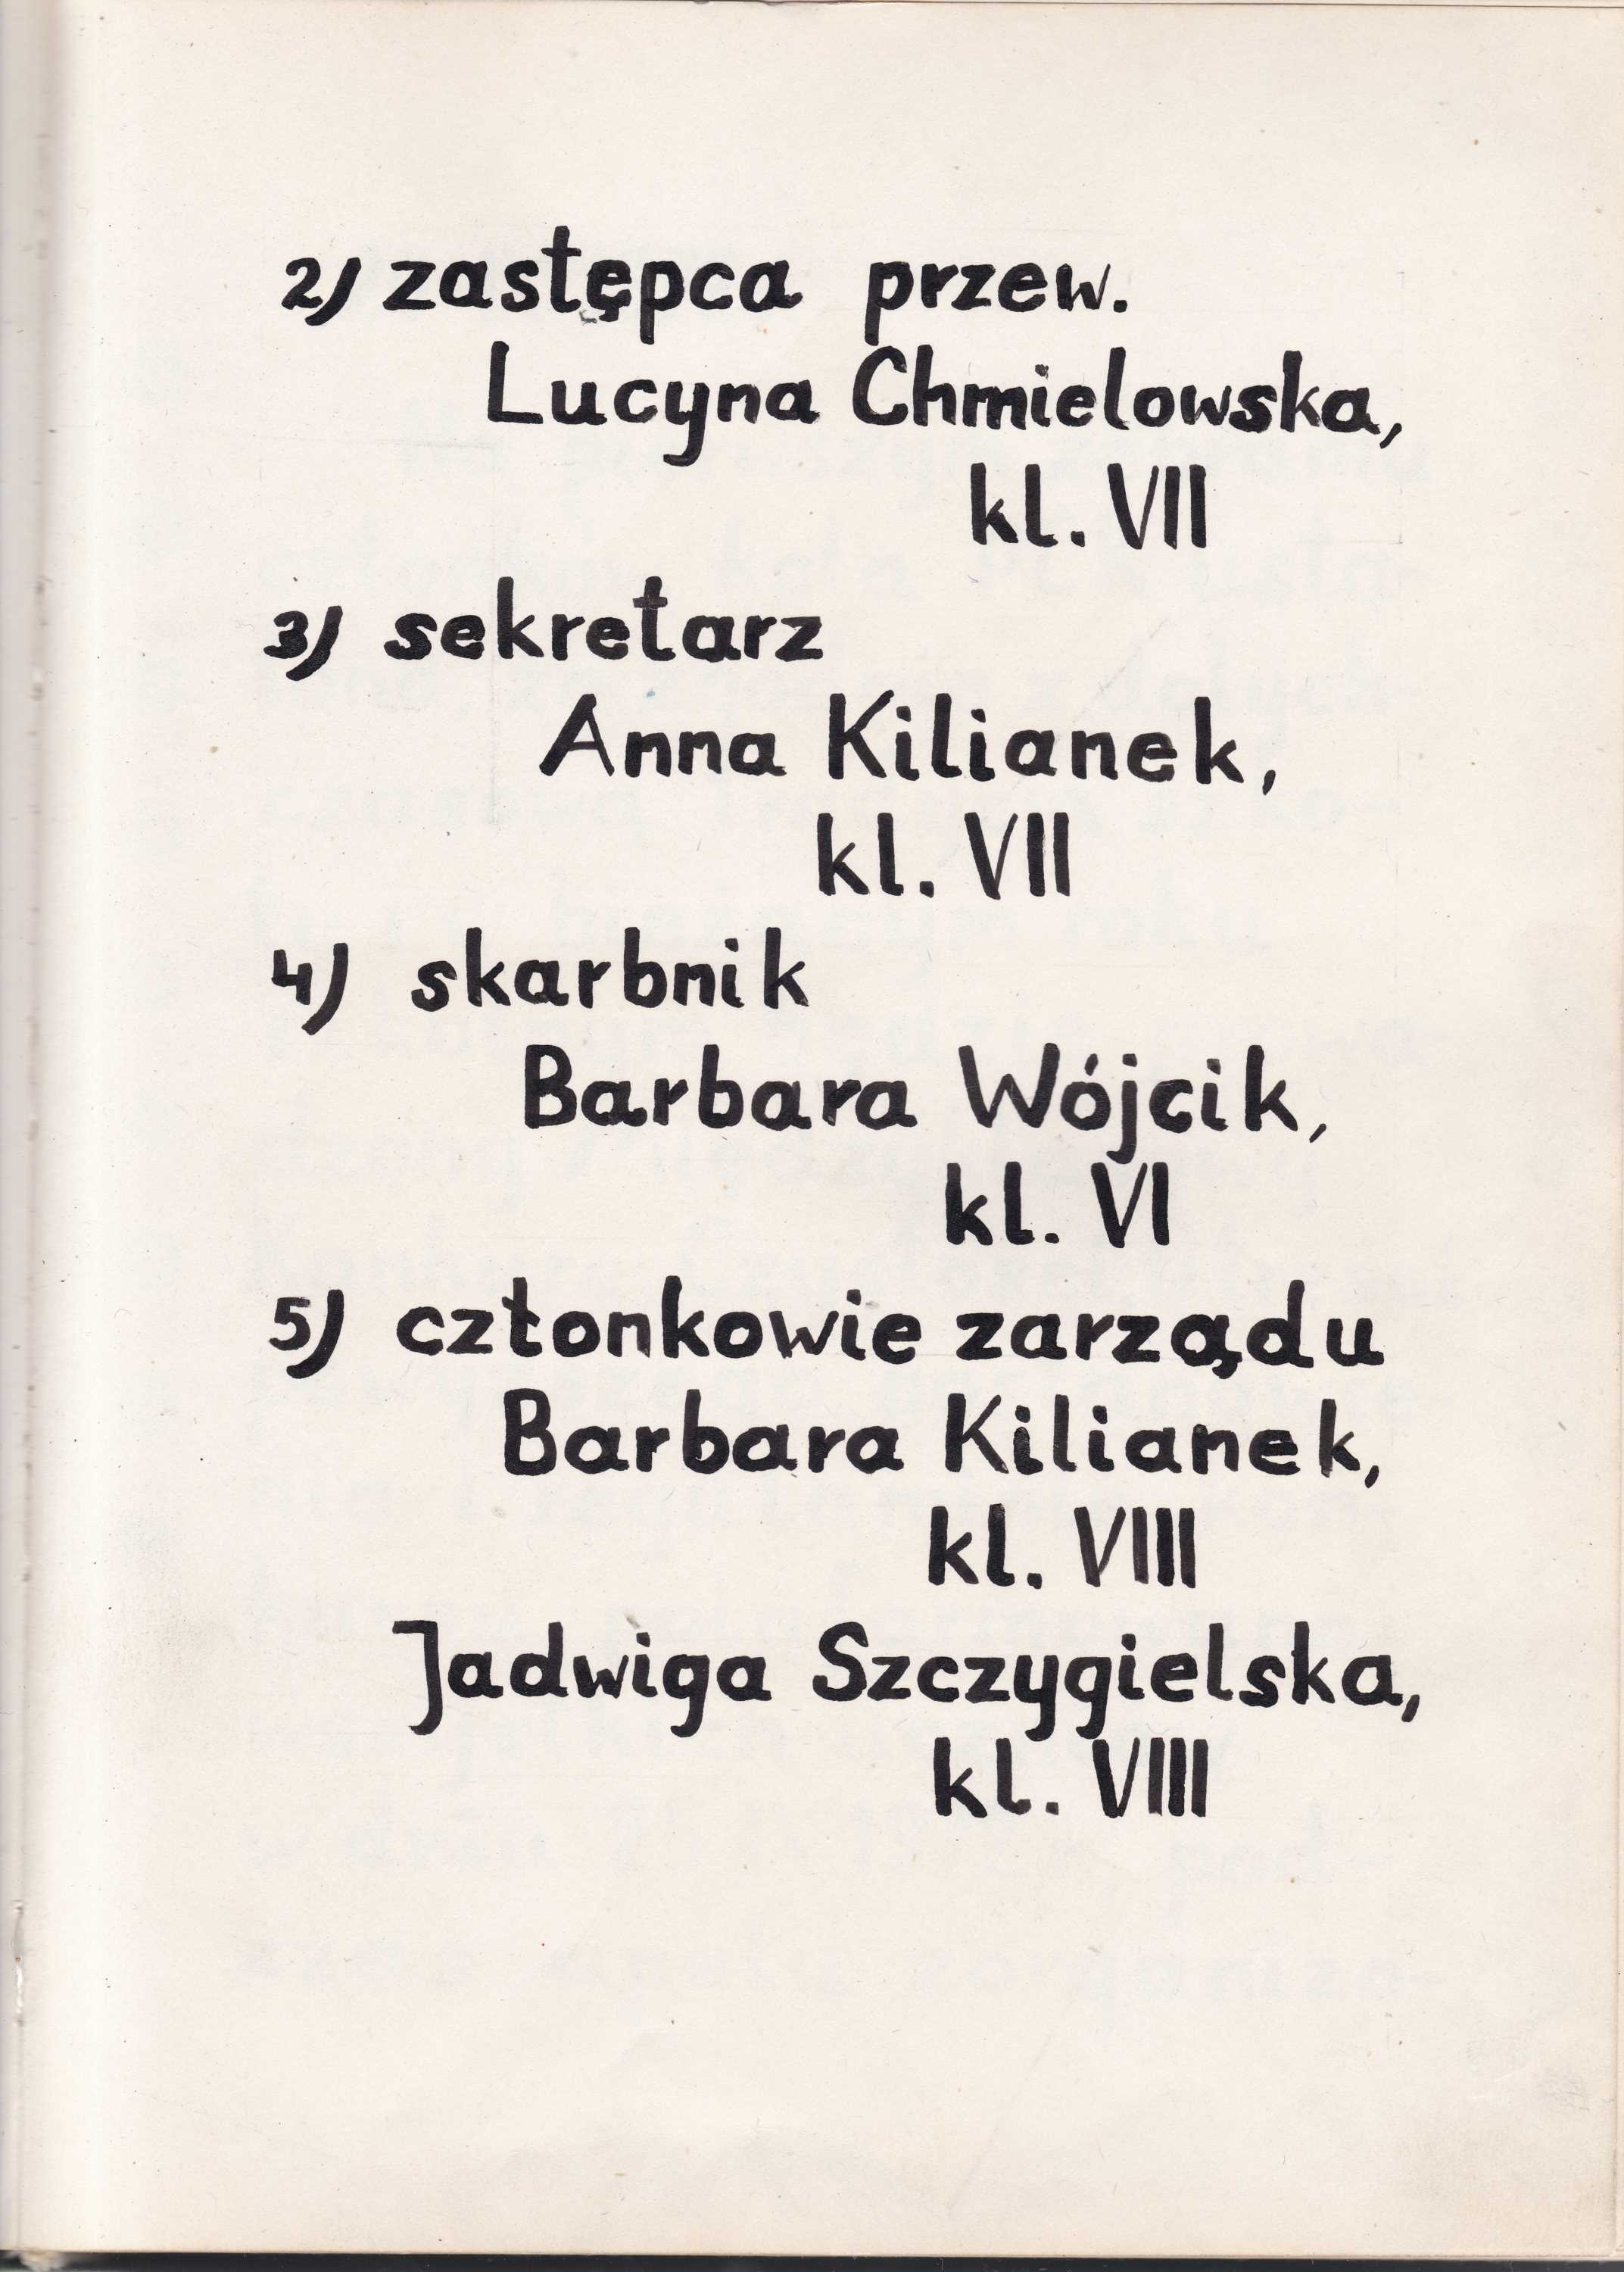 kronika sp2pck1972 75 (1)